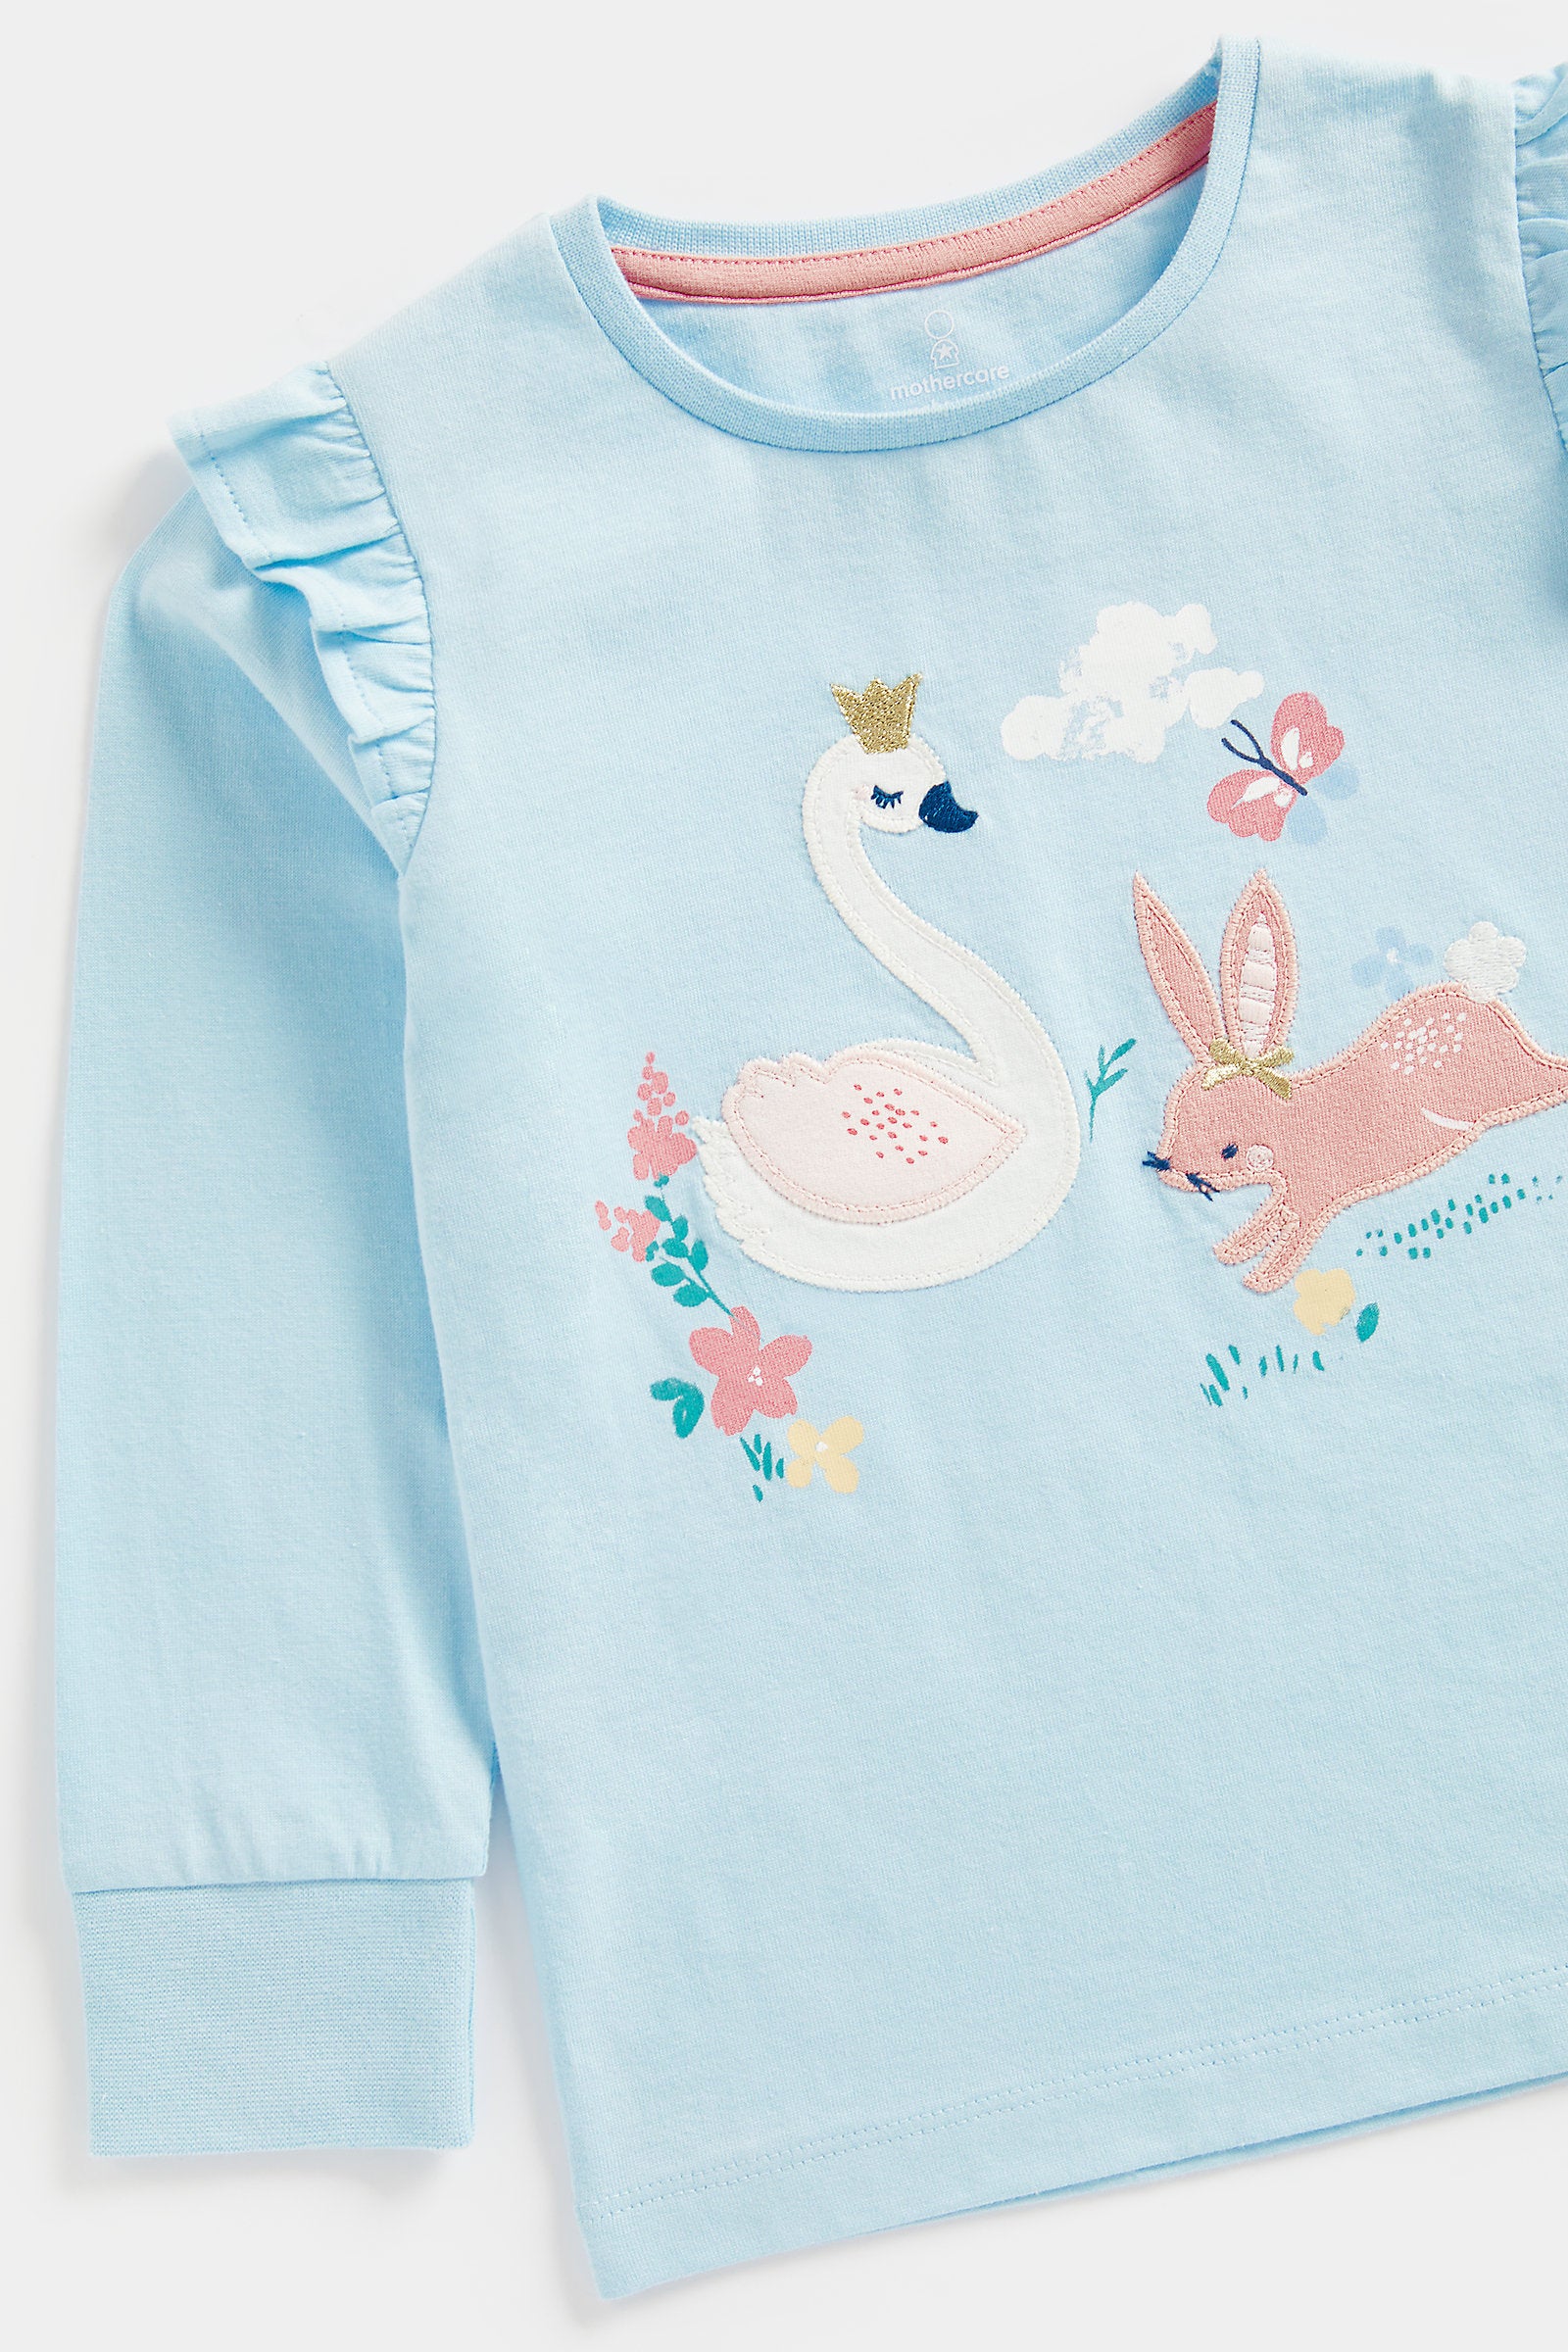 Mothercare Bunny and Swan Pyjamas - 2 Pack